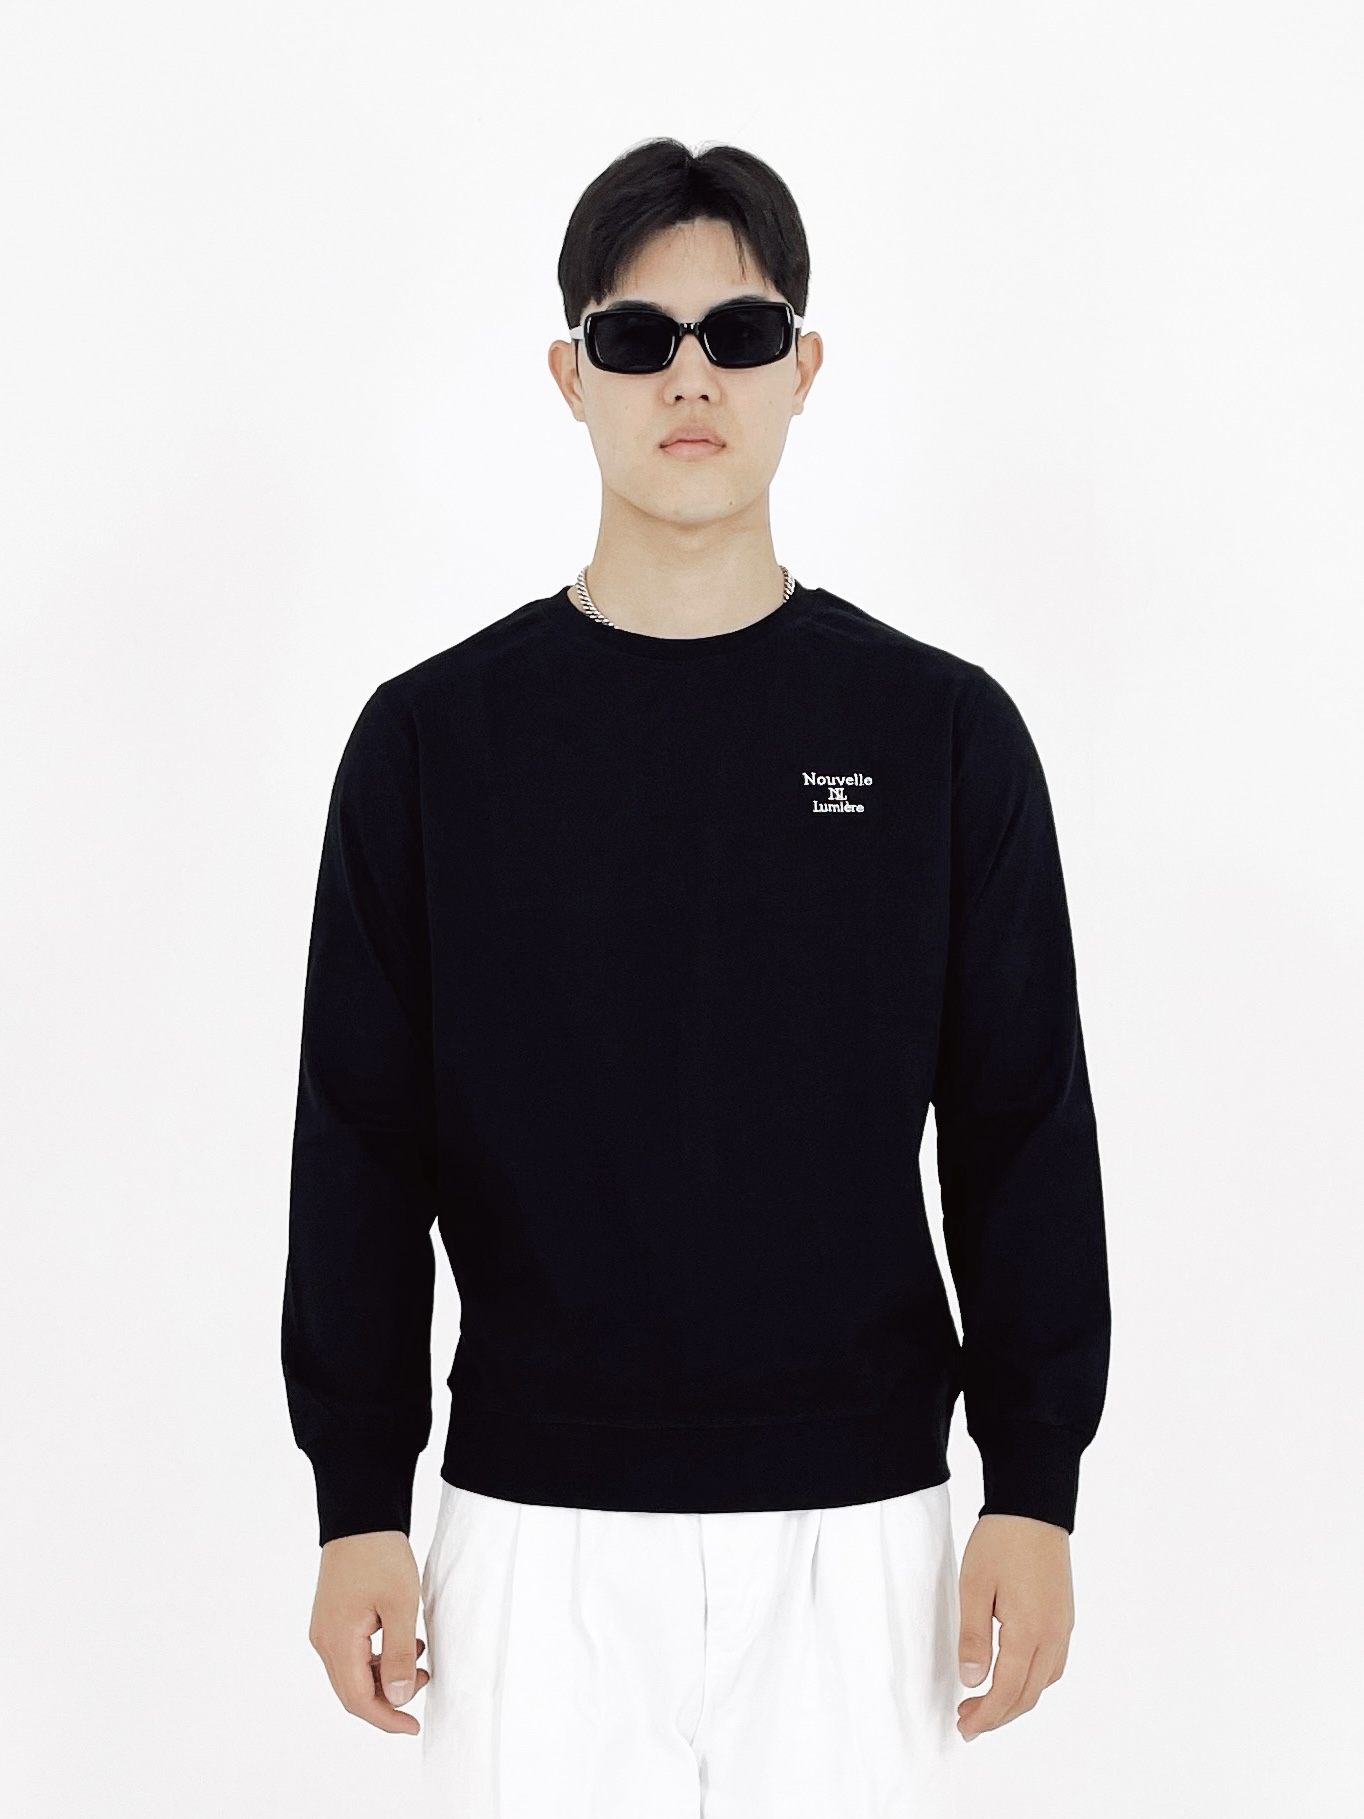 Nuvelemiere Classic Long Sleeve Sweatshirt Black